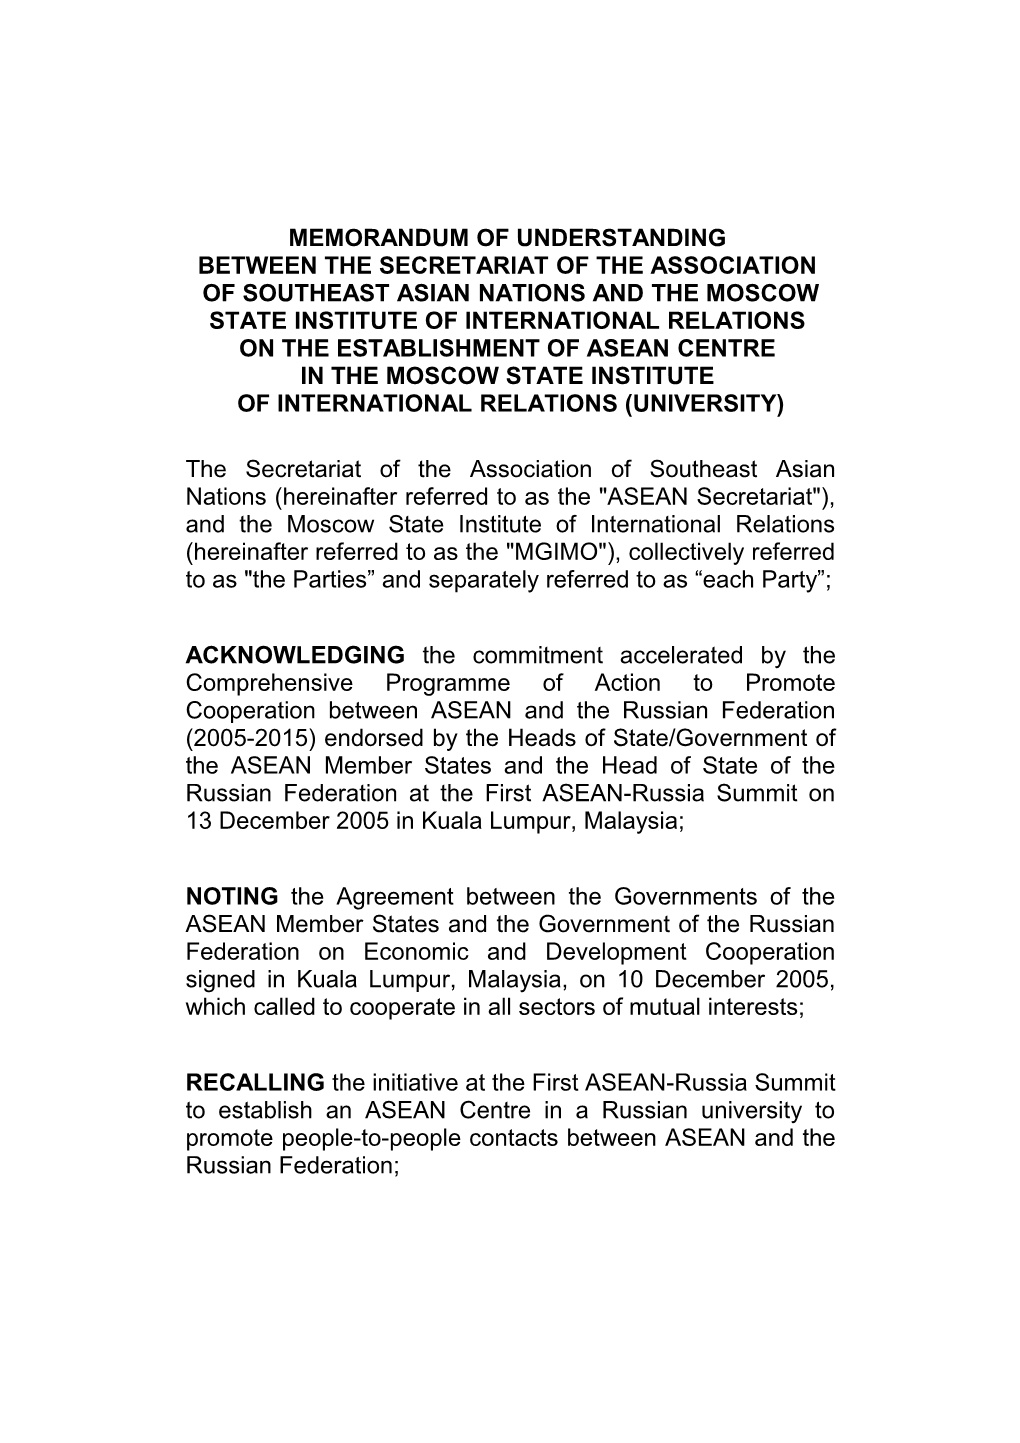 Memorandum of Understanding Between the Secretariat of the Association of Southeast Asian